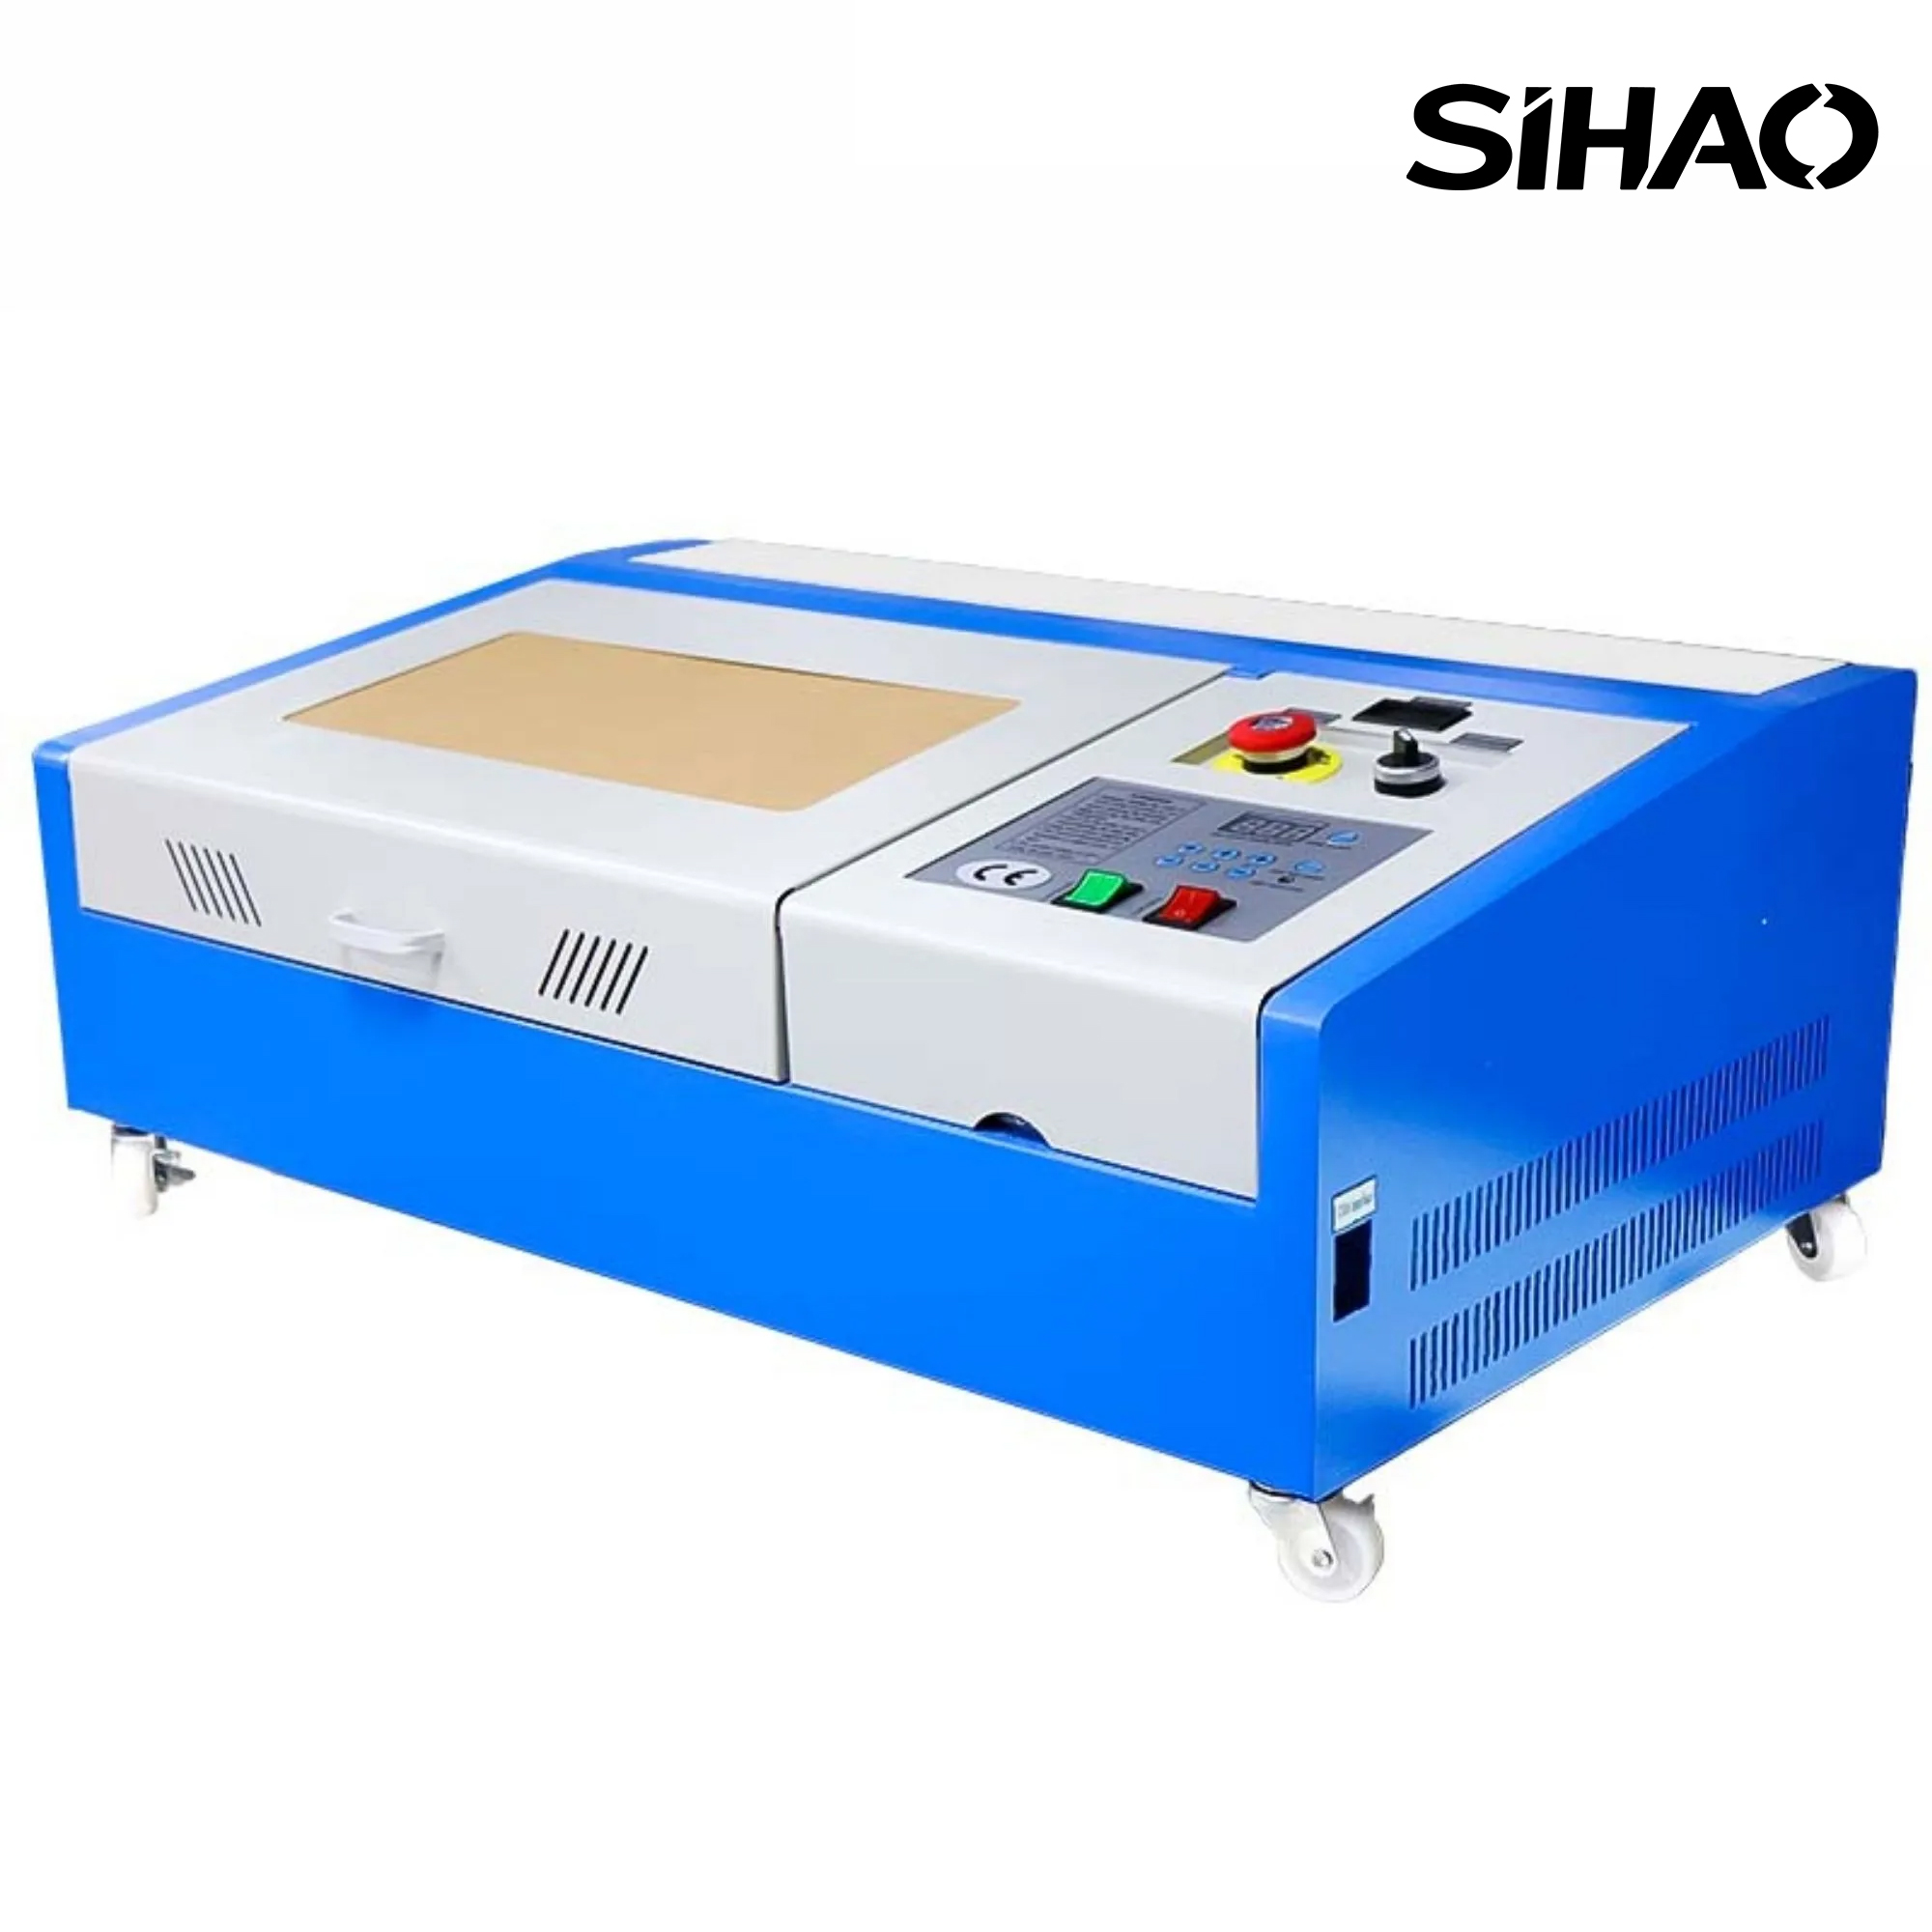 SIHAO 300X200MM Laser Engraving Machine 40